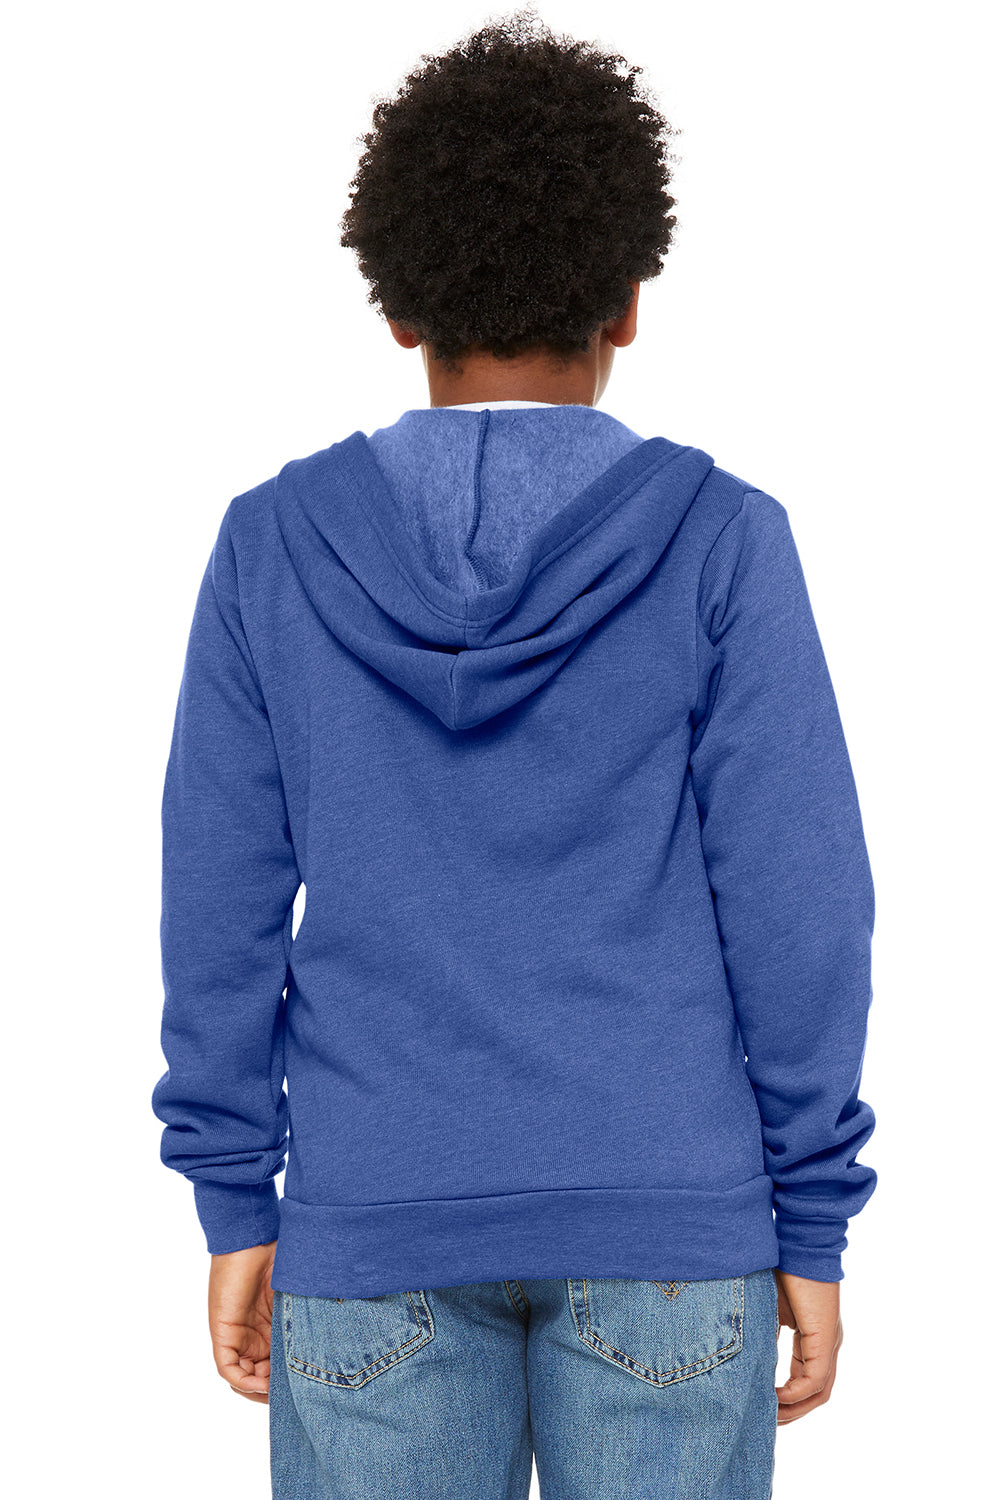 Bella + Canvas 3739Y Youth Sponge Fleece Full Zip Hooded Sweatshirt Hoodie Heather True Royal Blue Model Back